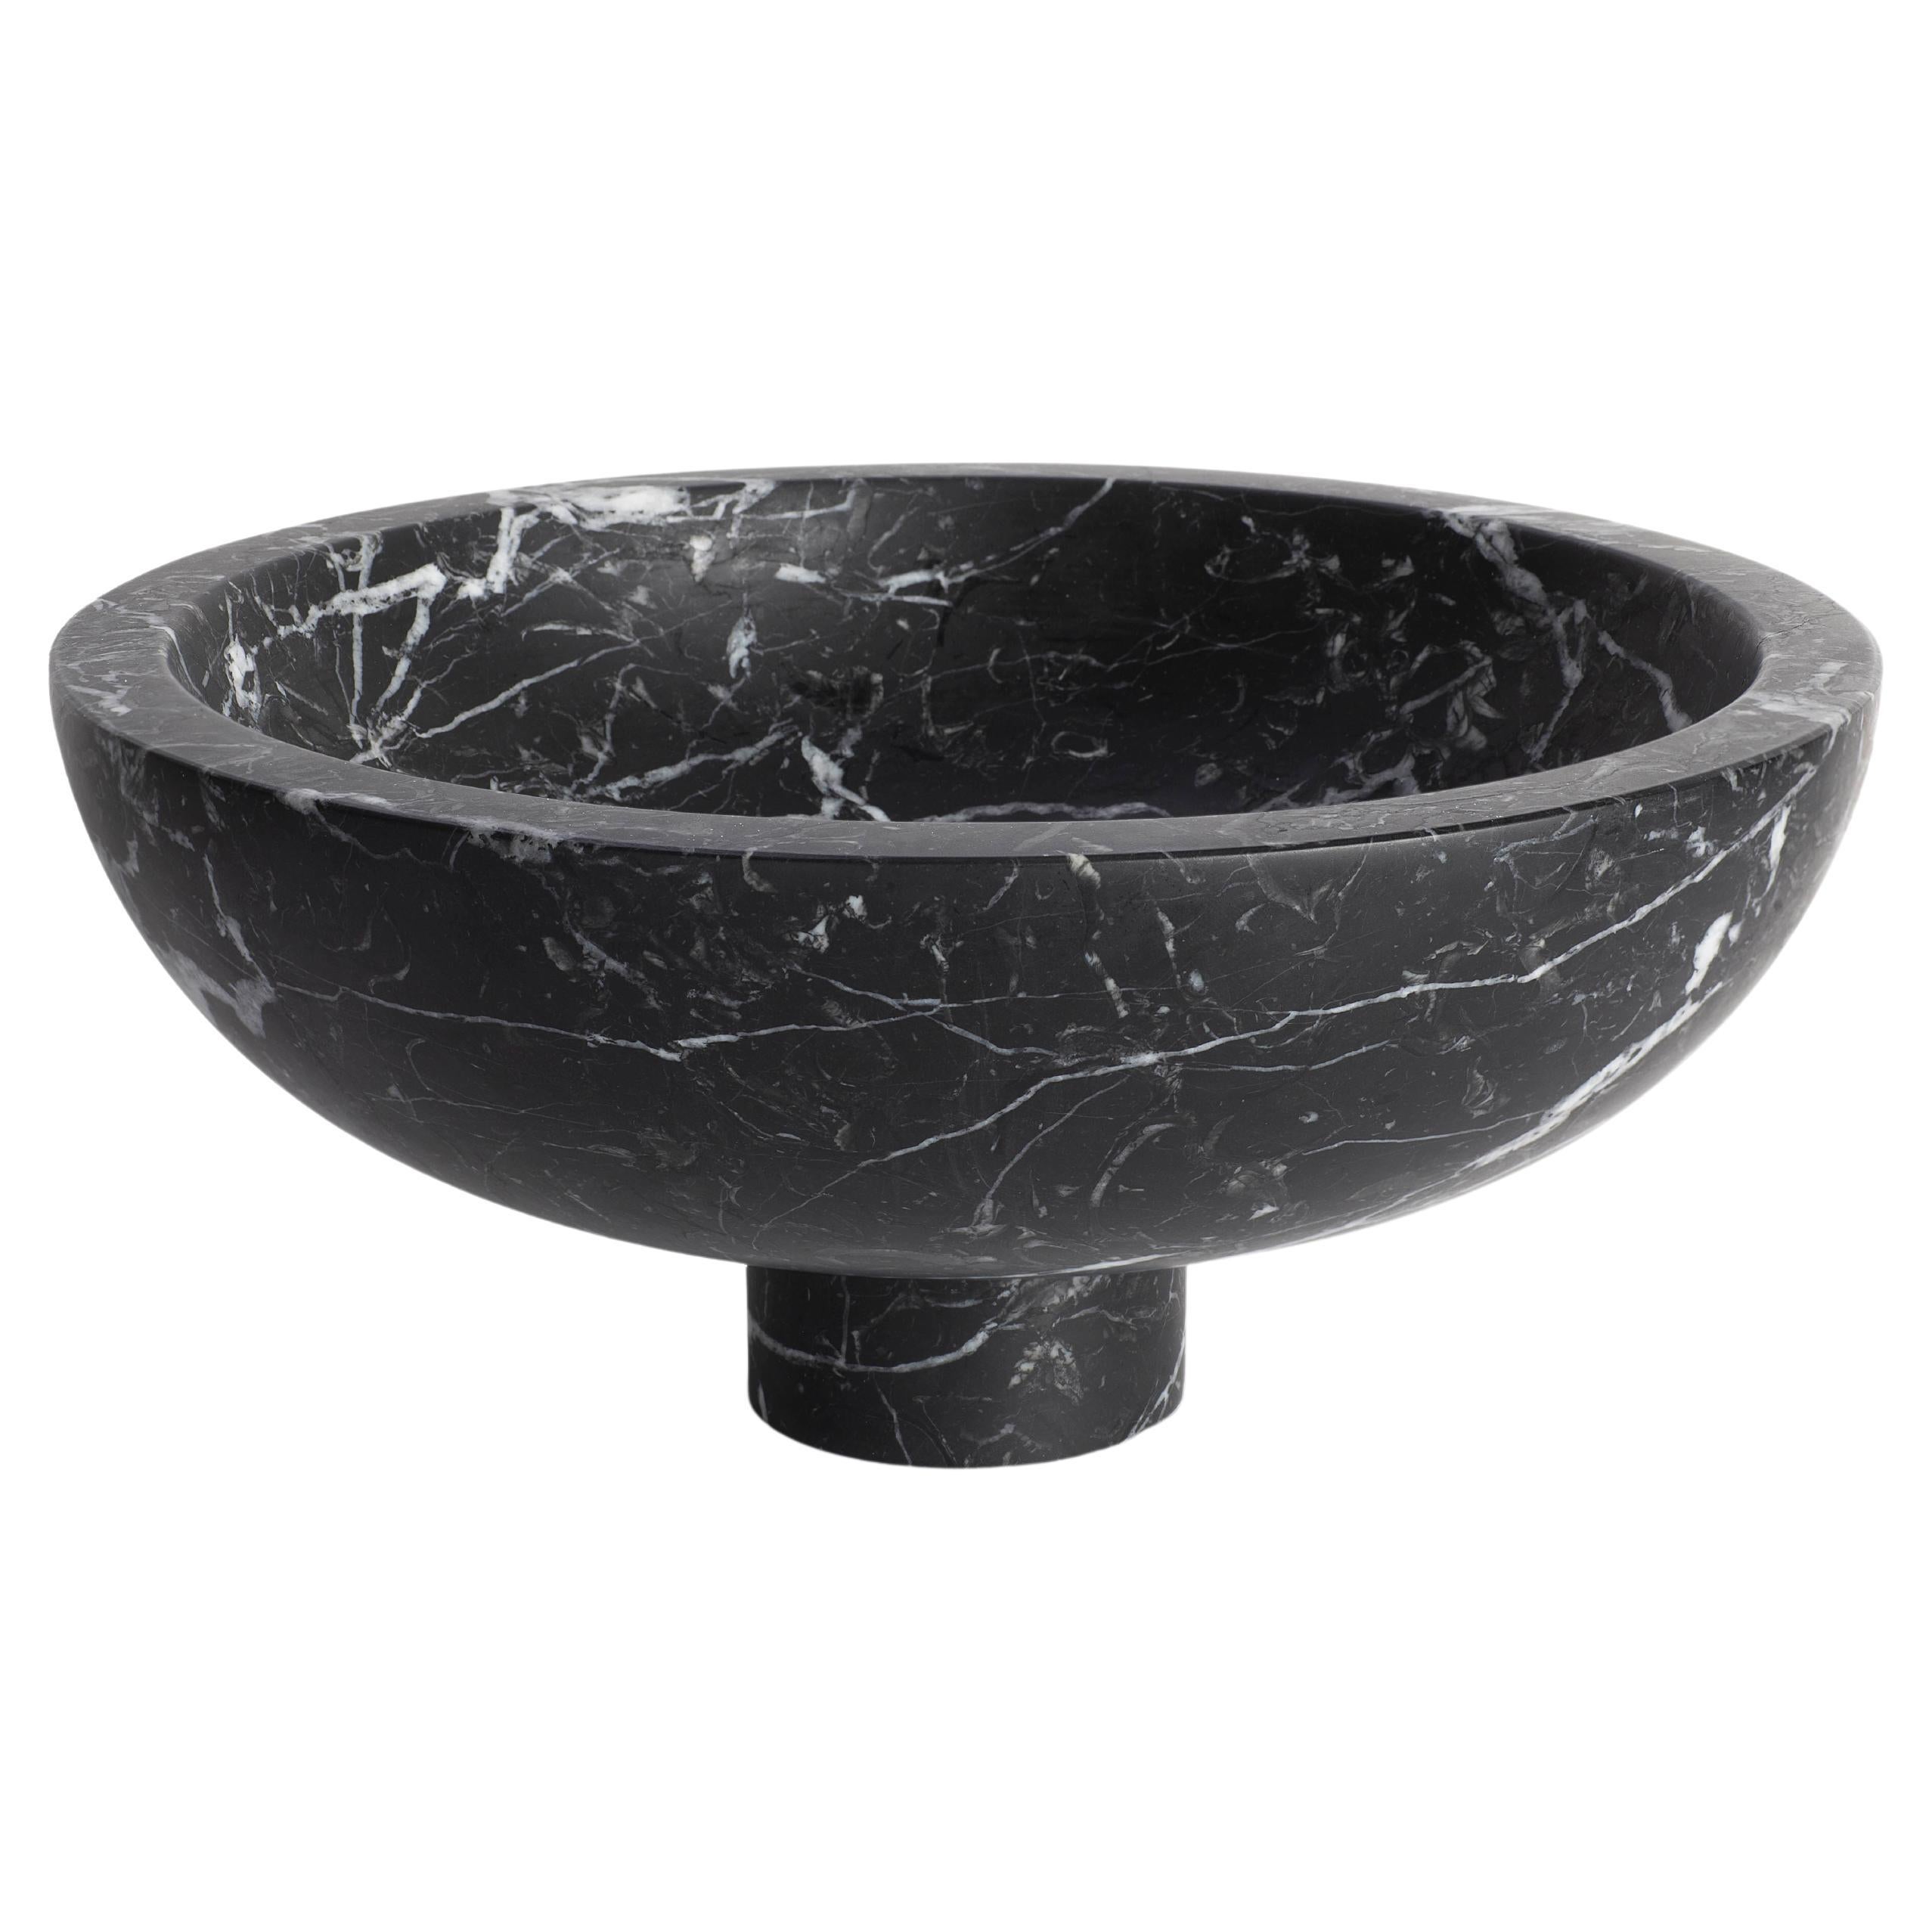 Fruit Bowl in Black Marble, by Karen Chekerdjian, Made in Italy _ Stock